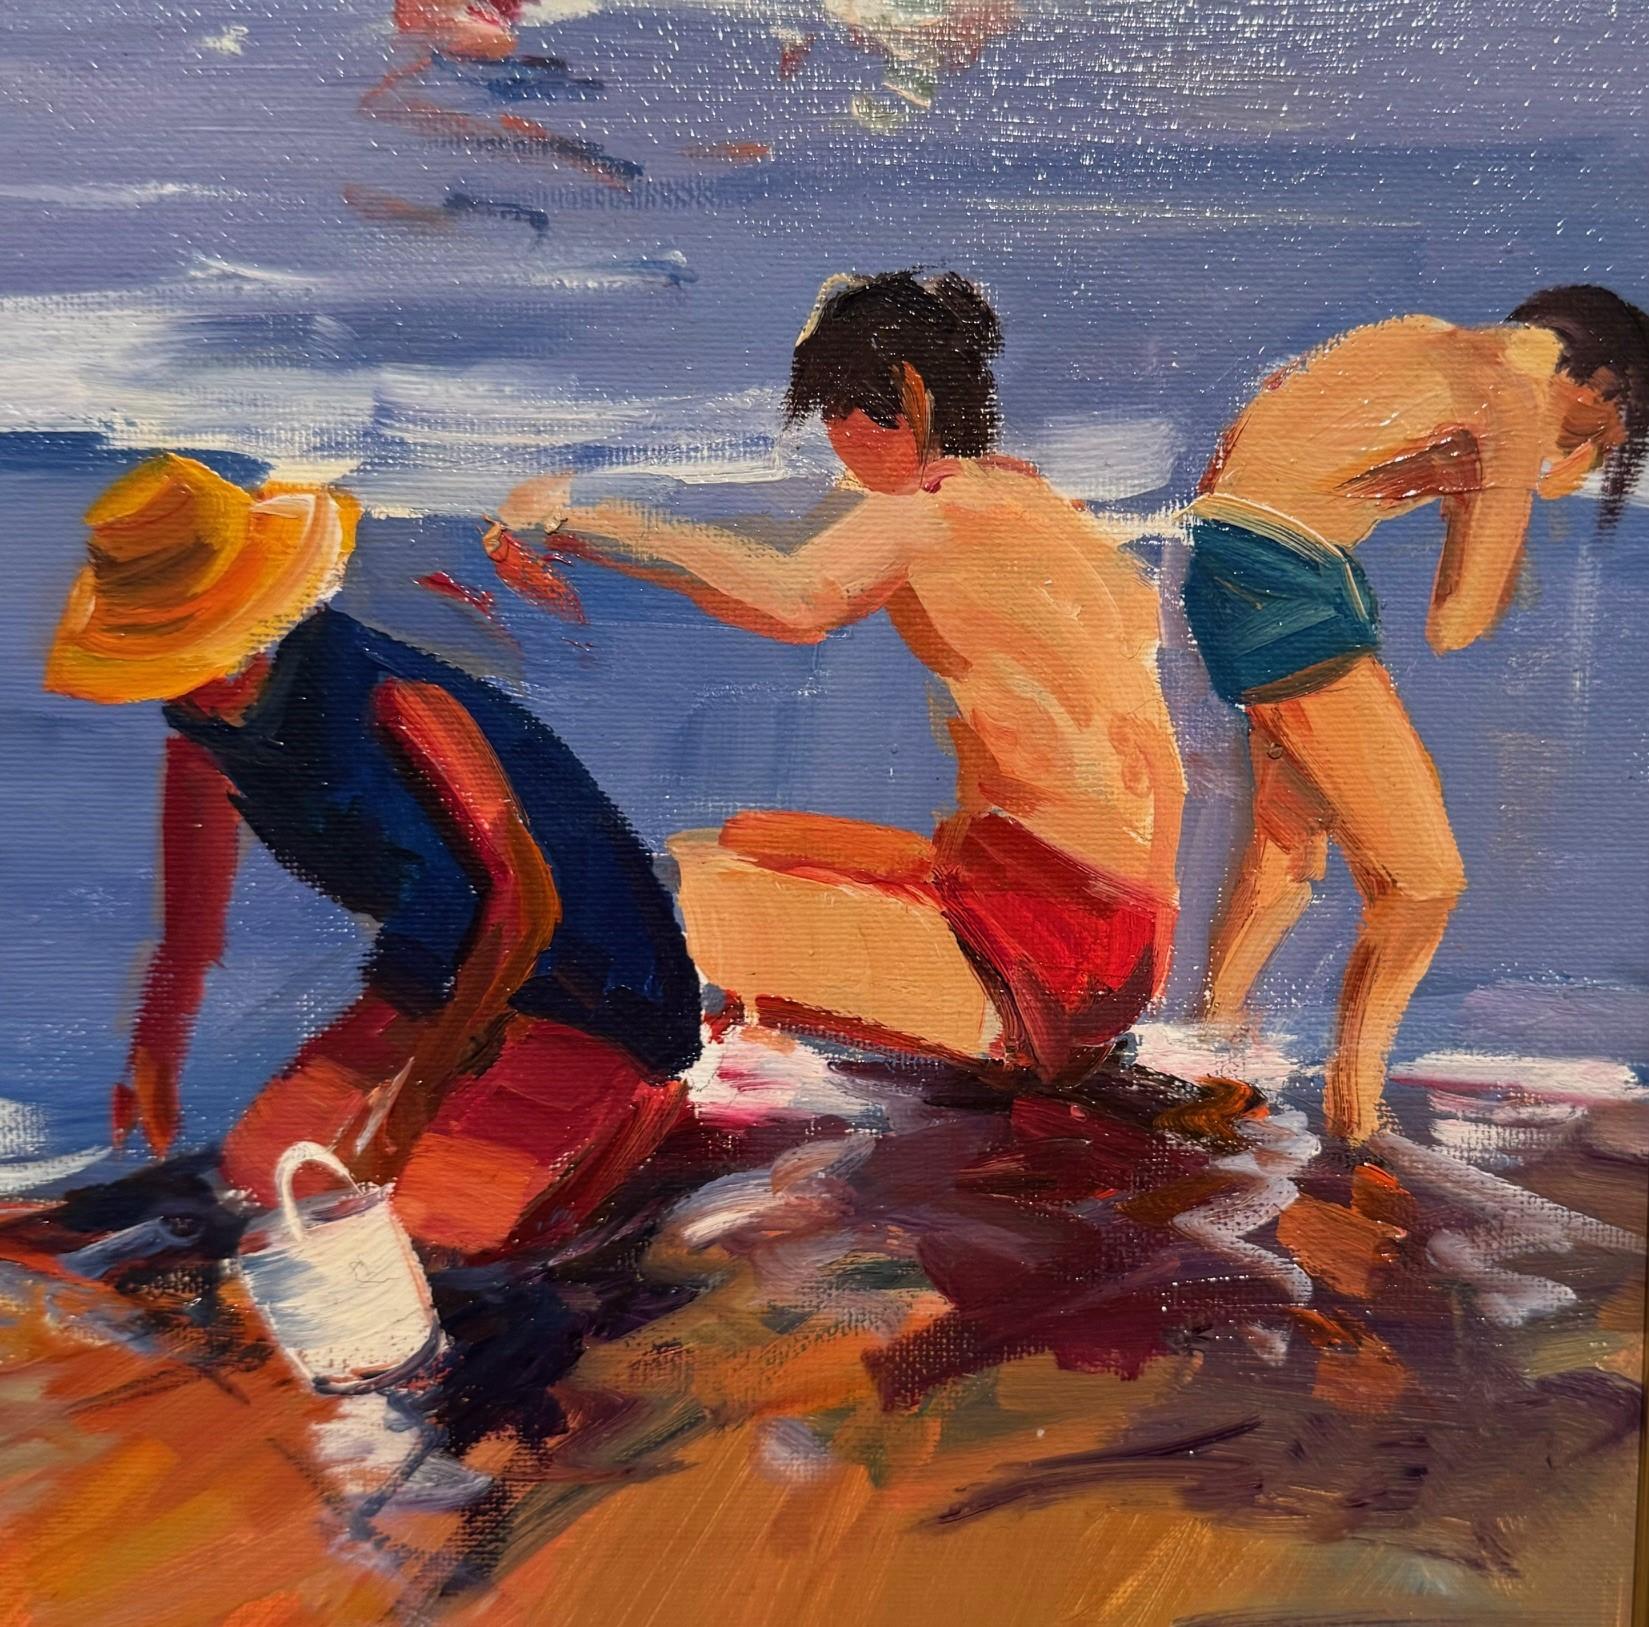 Samedi au soleil - Impressionnisme Painting par Ventura Diaz